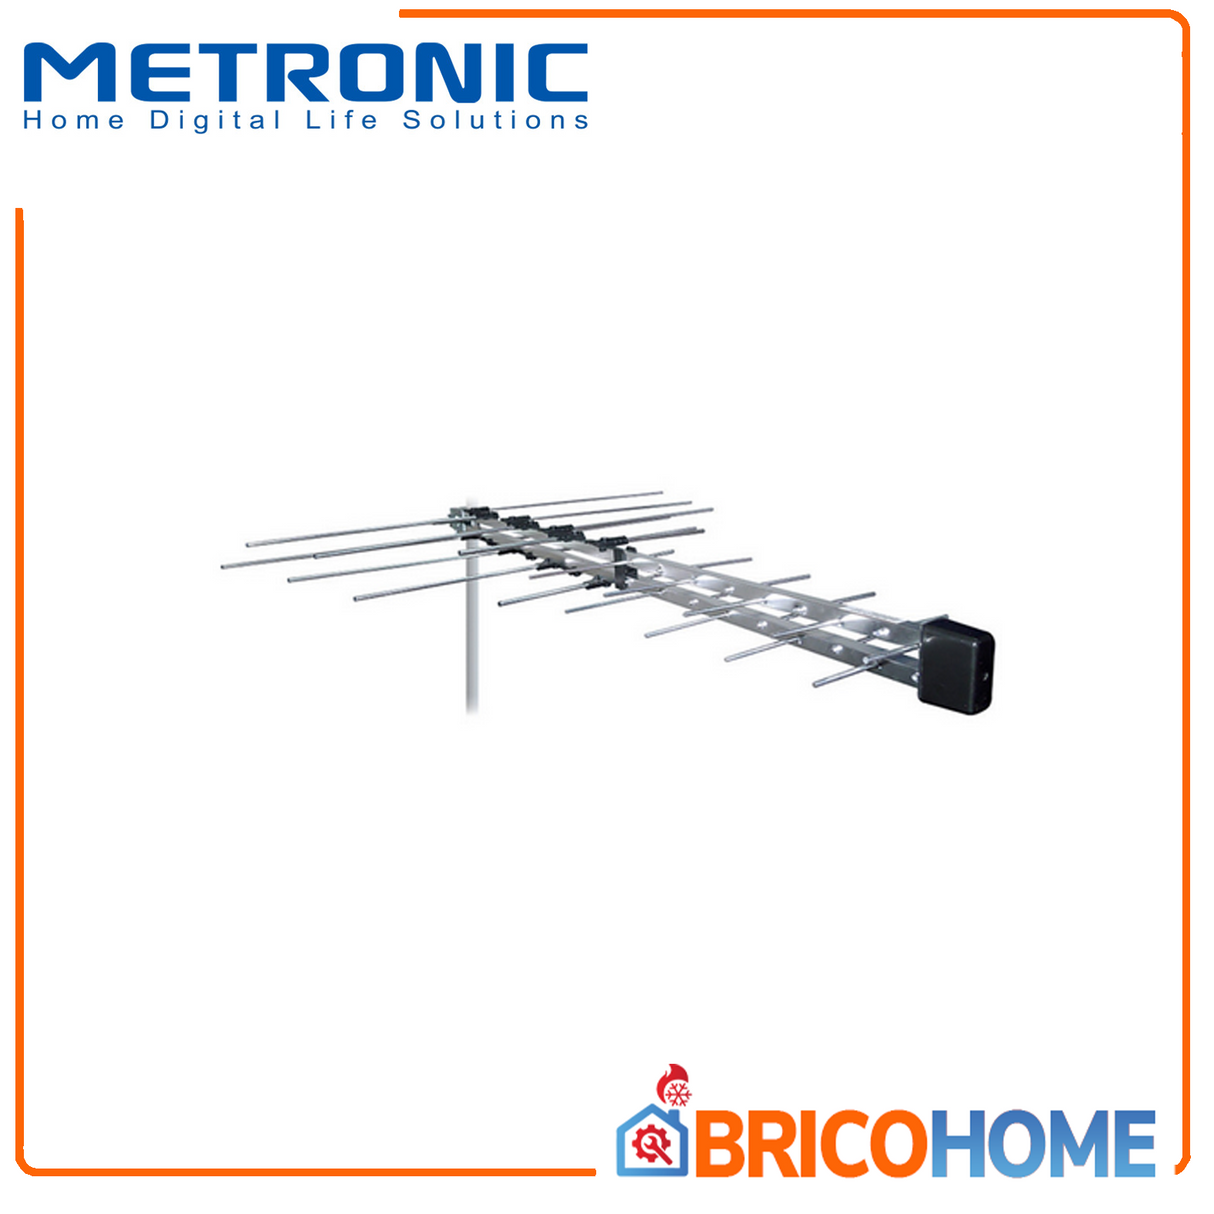 Externe logarithmische Antenne 32 Elemente - Metronic